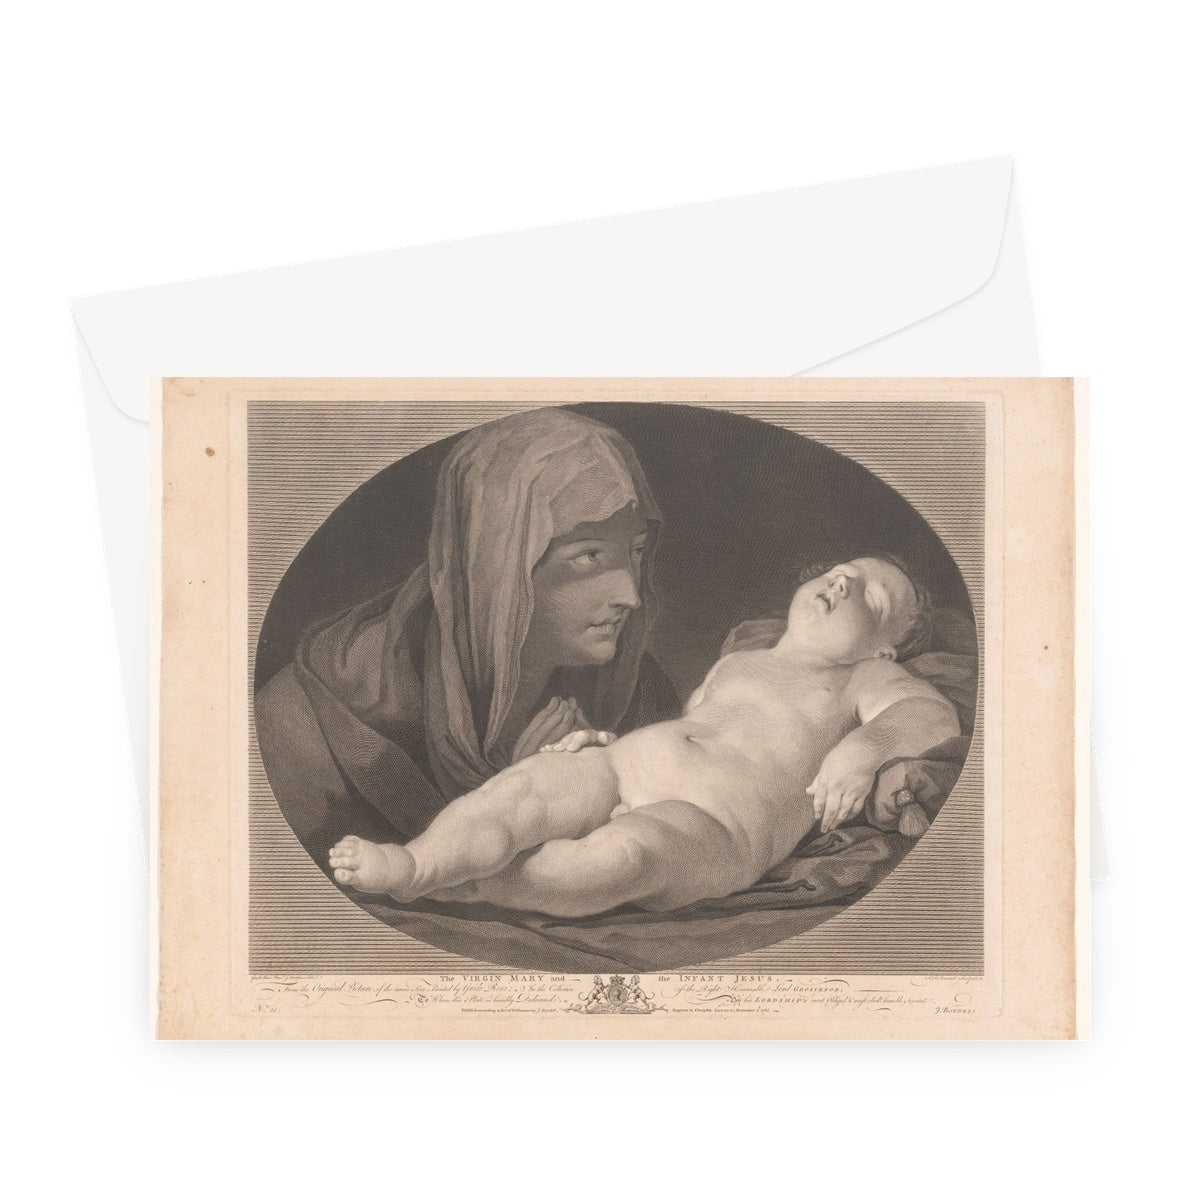 Maria bij slapende Christus, Simon François Ravenet (le vieux), after Guido Reni, after John Hamilton Mortimer, 1765 - Greeting Card